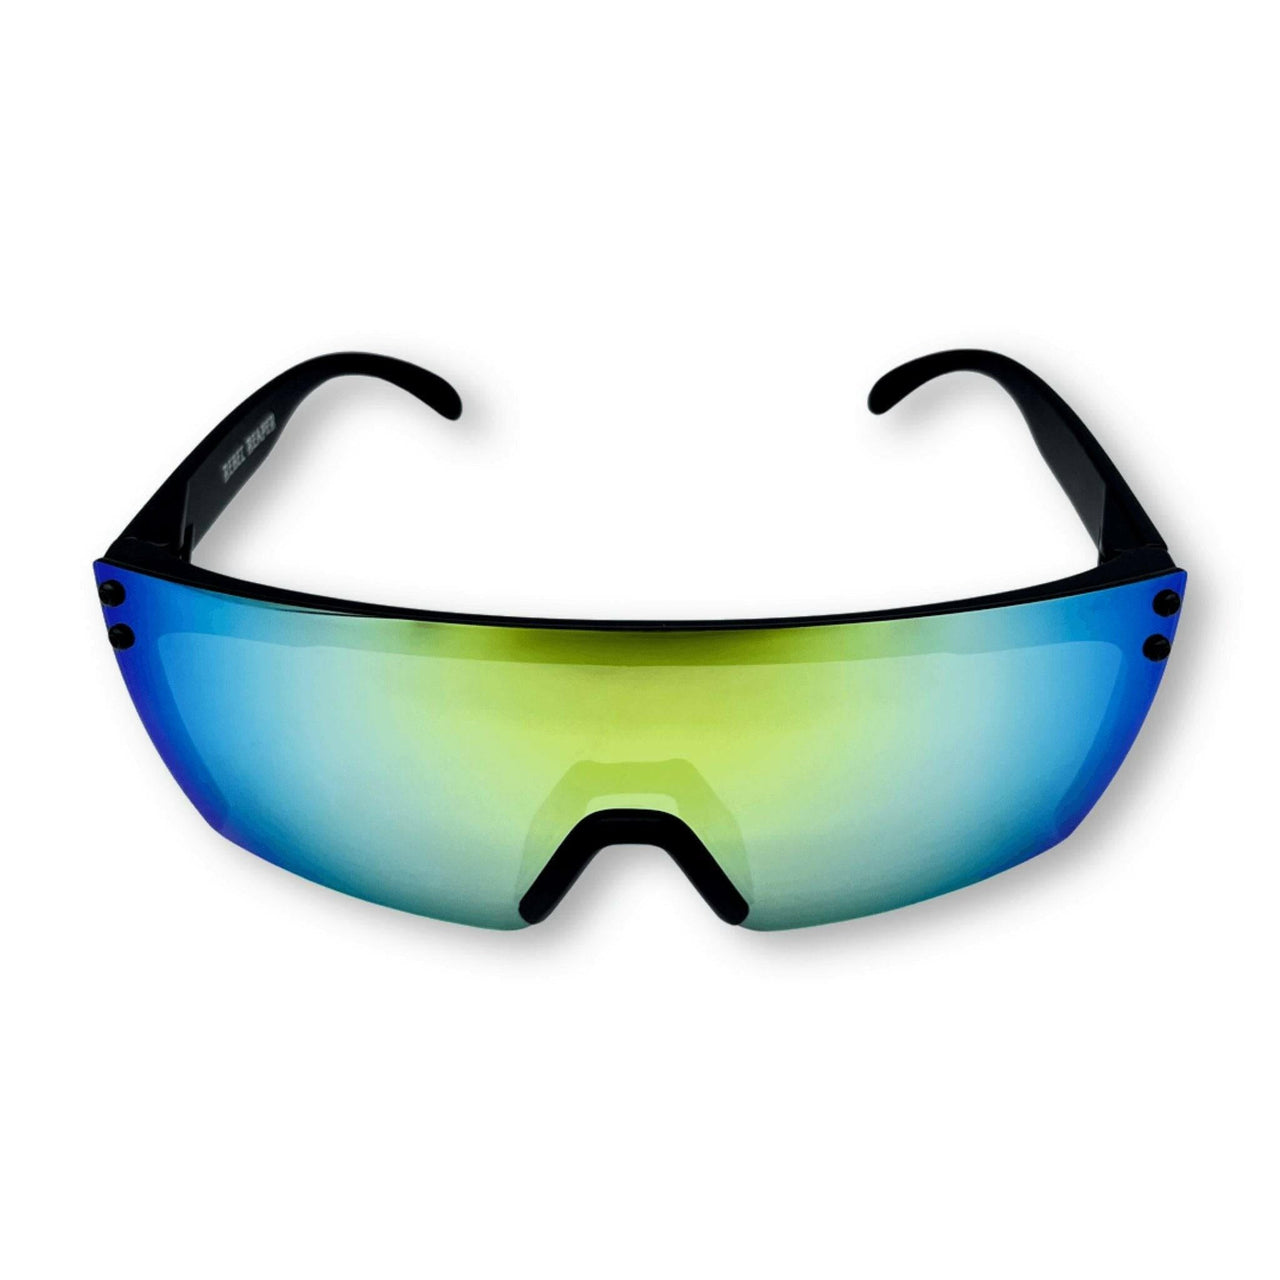 Hogans Green Mirror Polarized Lens Sunglasses